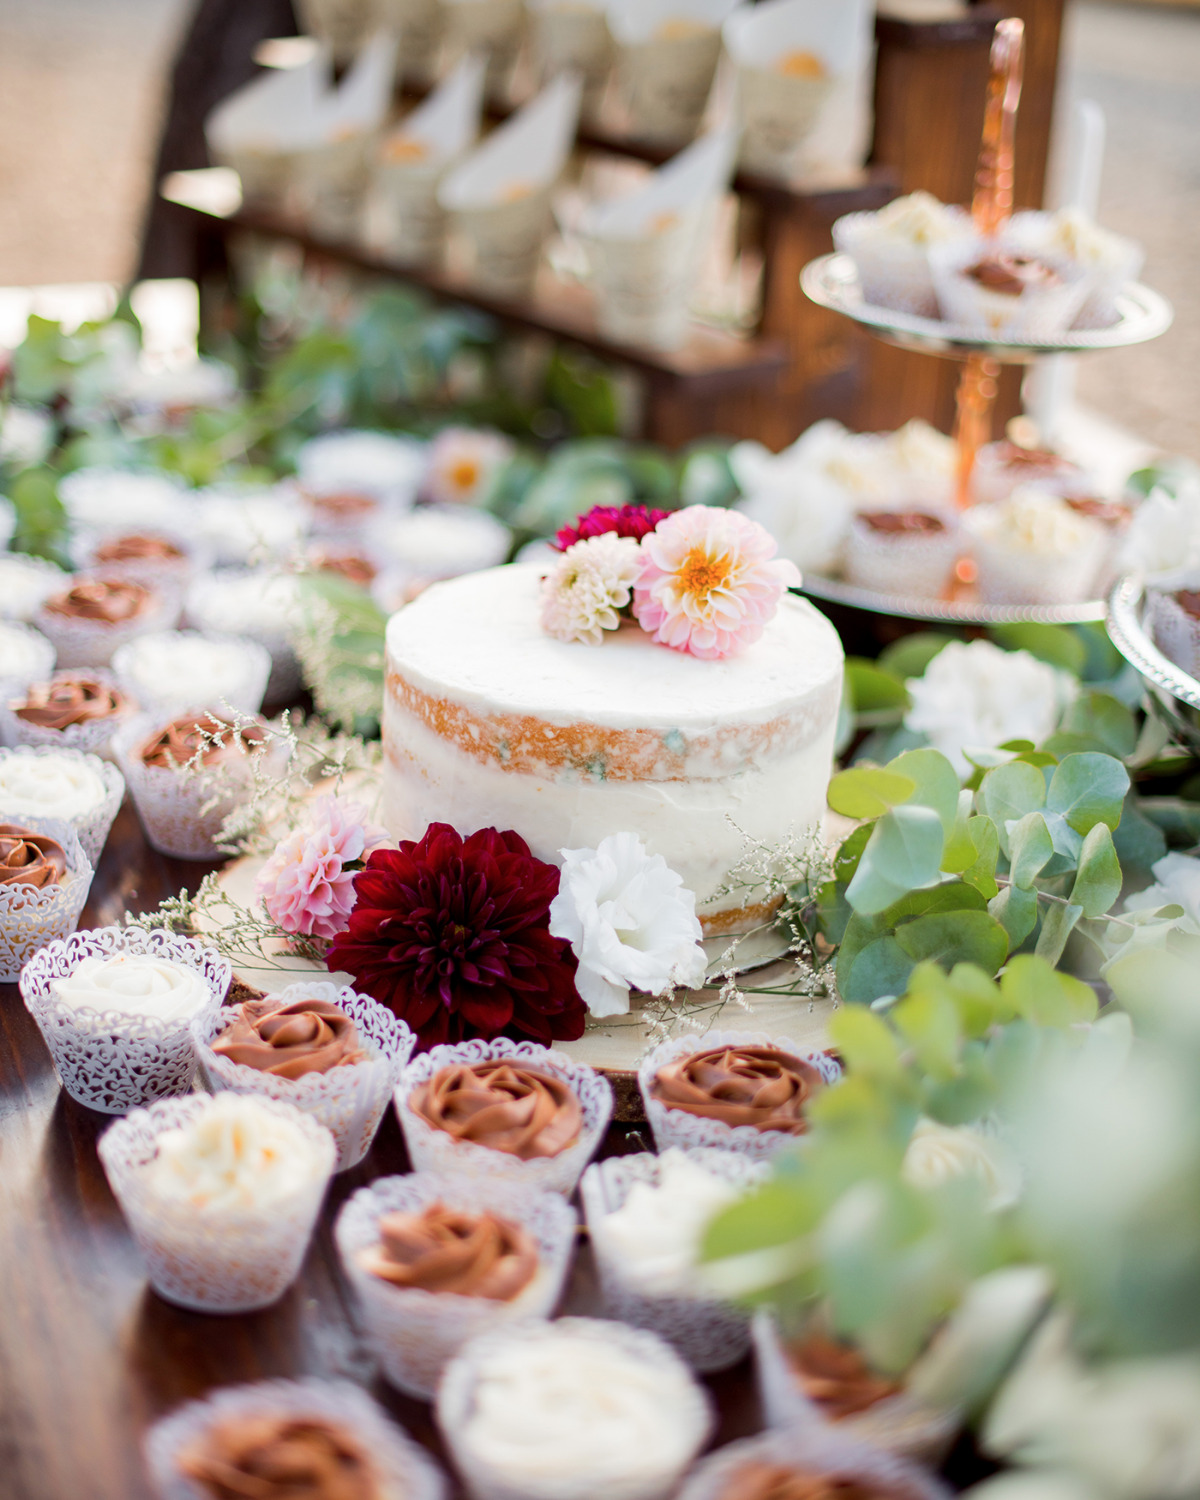 cupcakes and small wedding cake